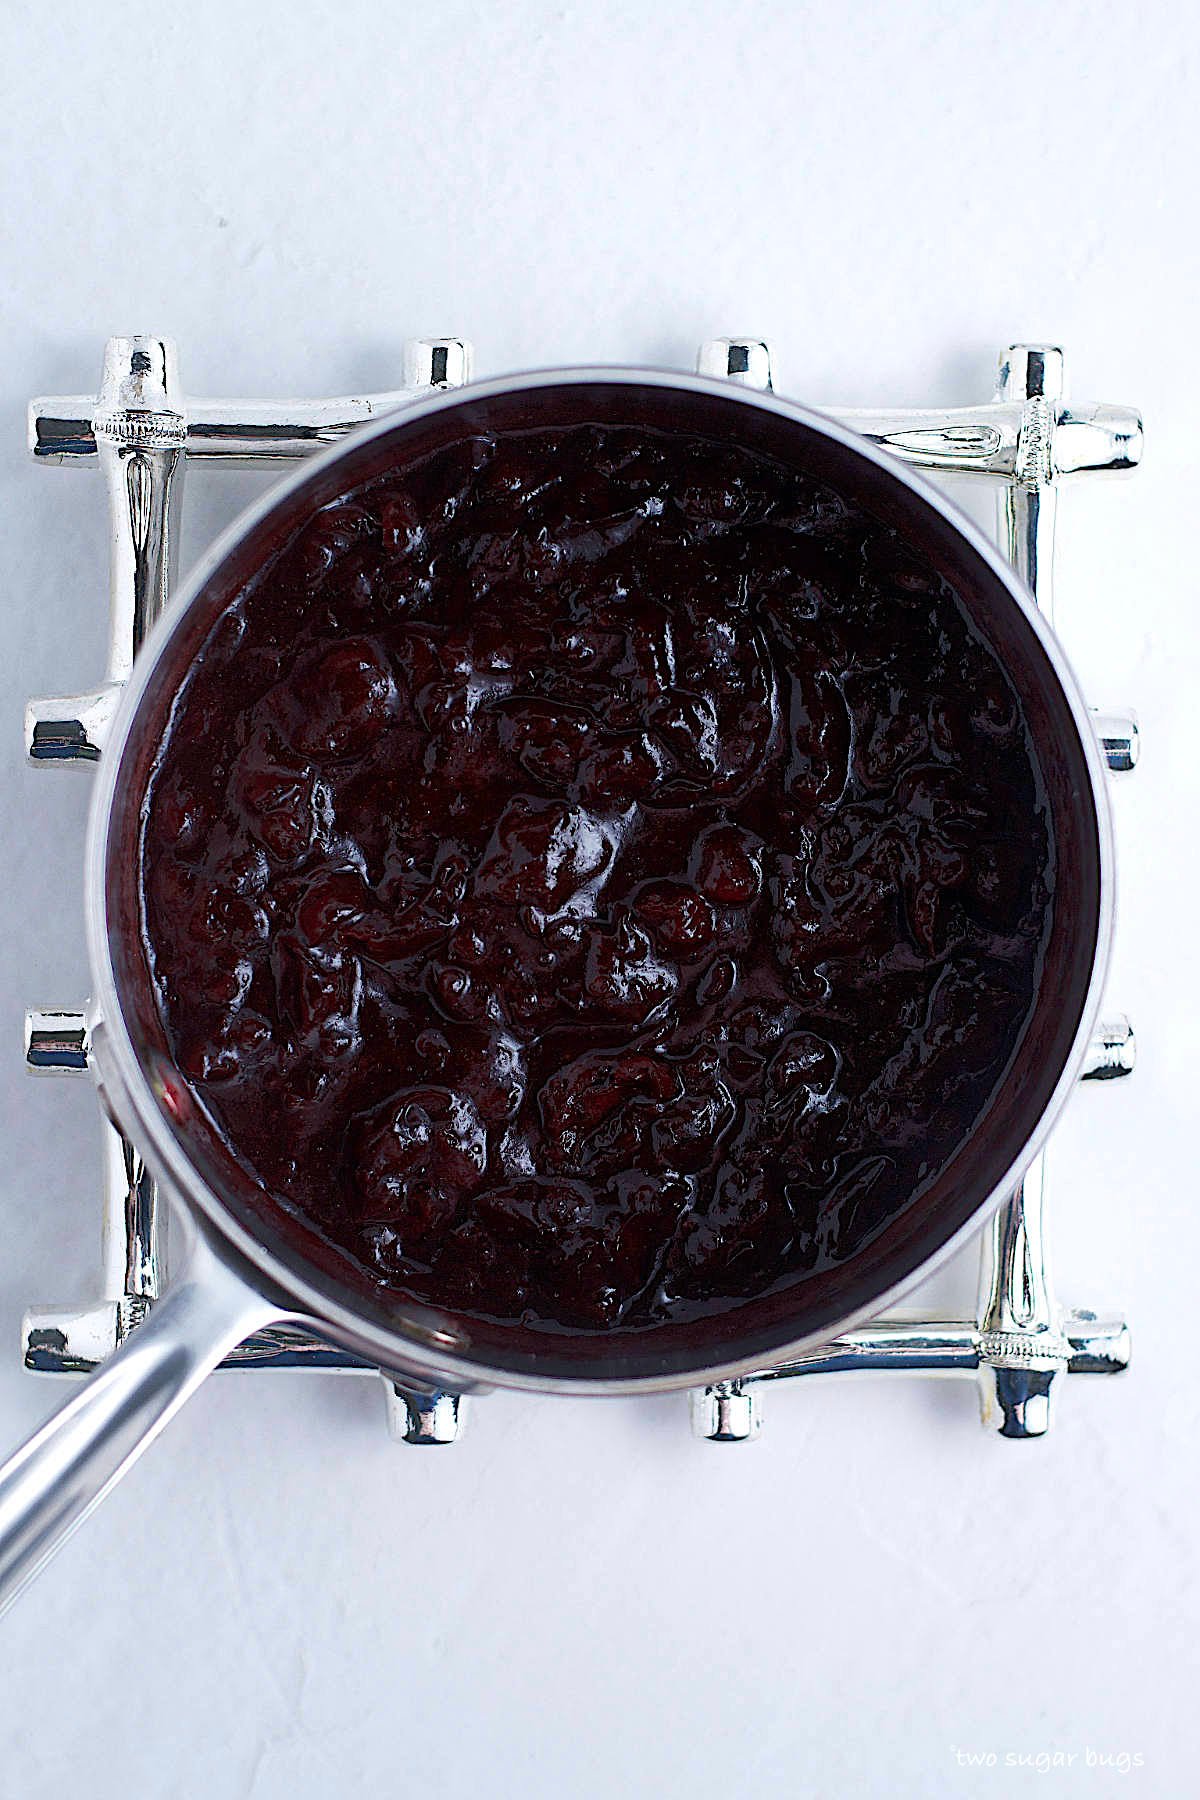 cherry jam filling in a saucepan